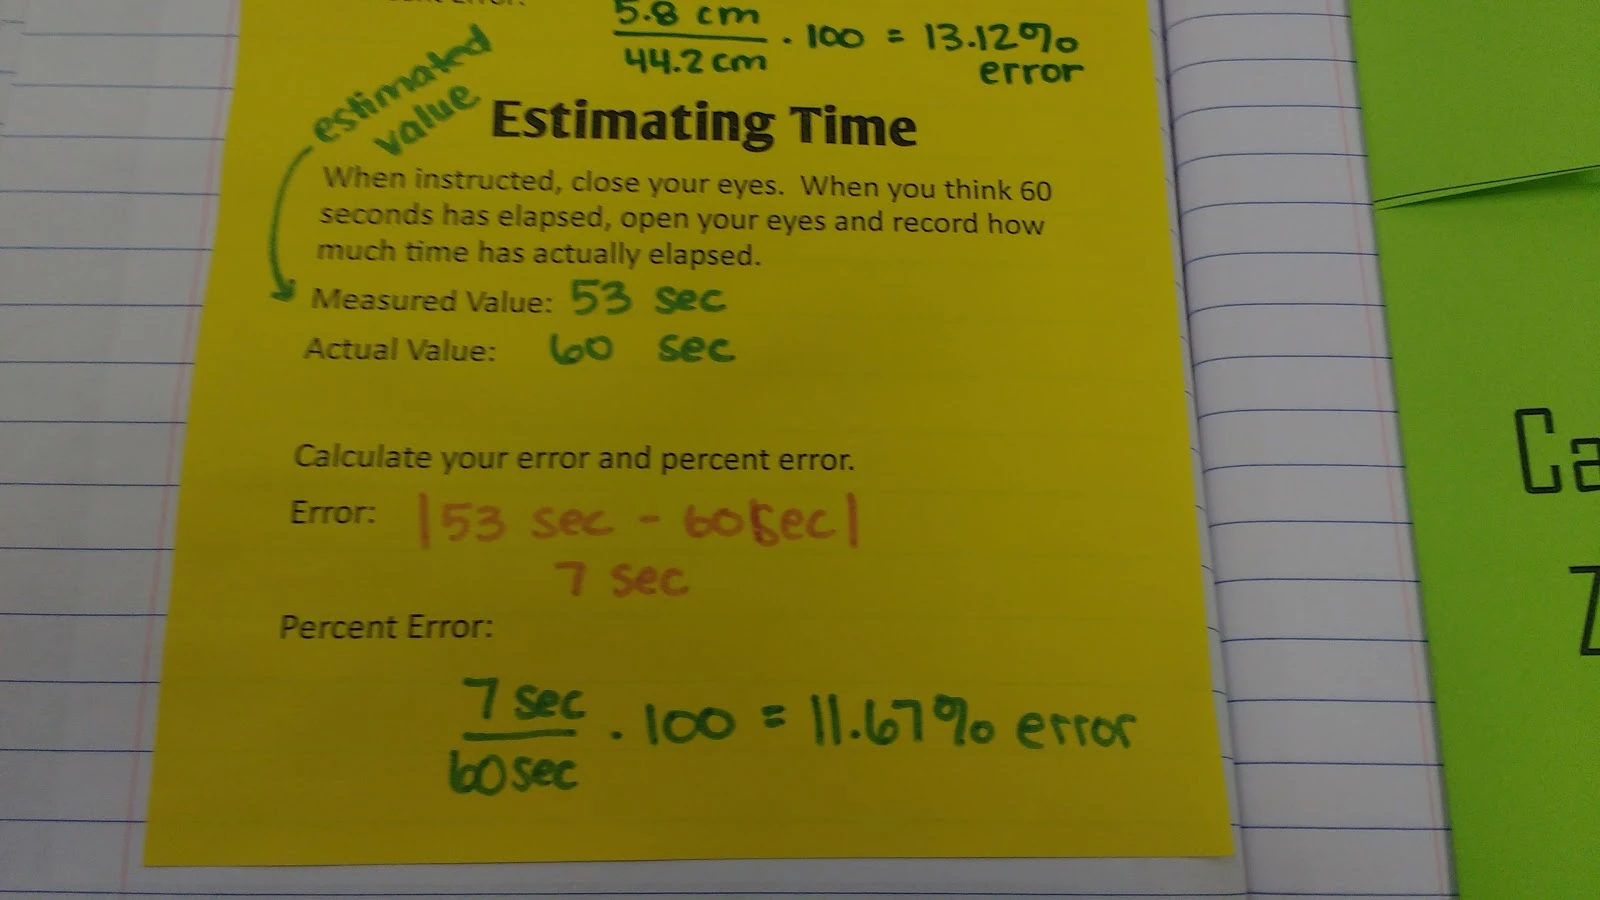 estimating time mini lab for calculating error and percent error. 